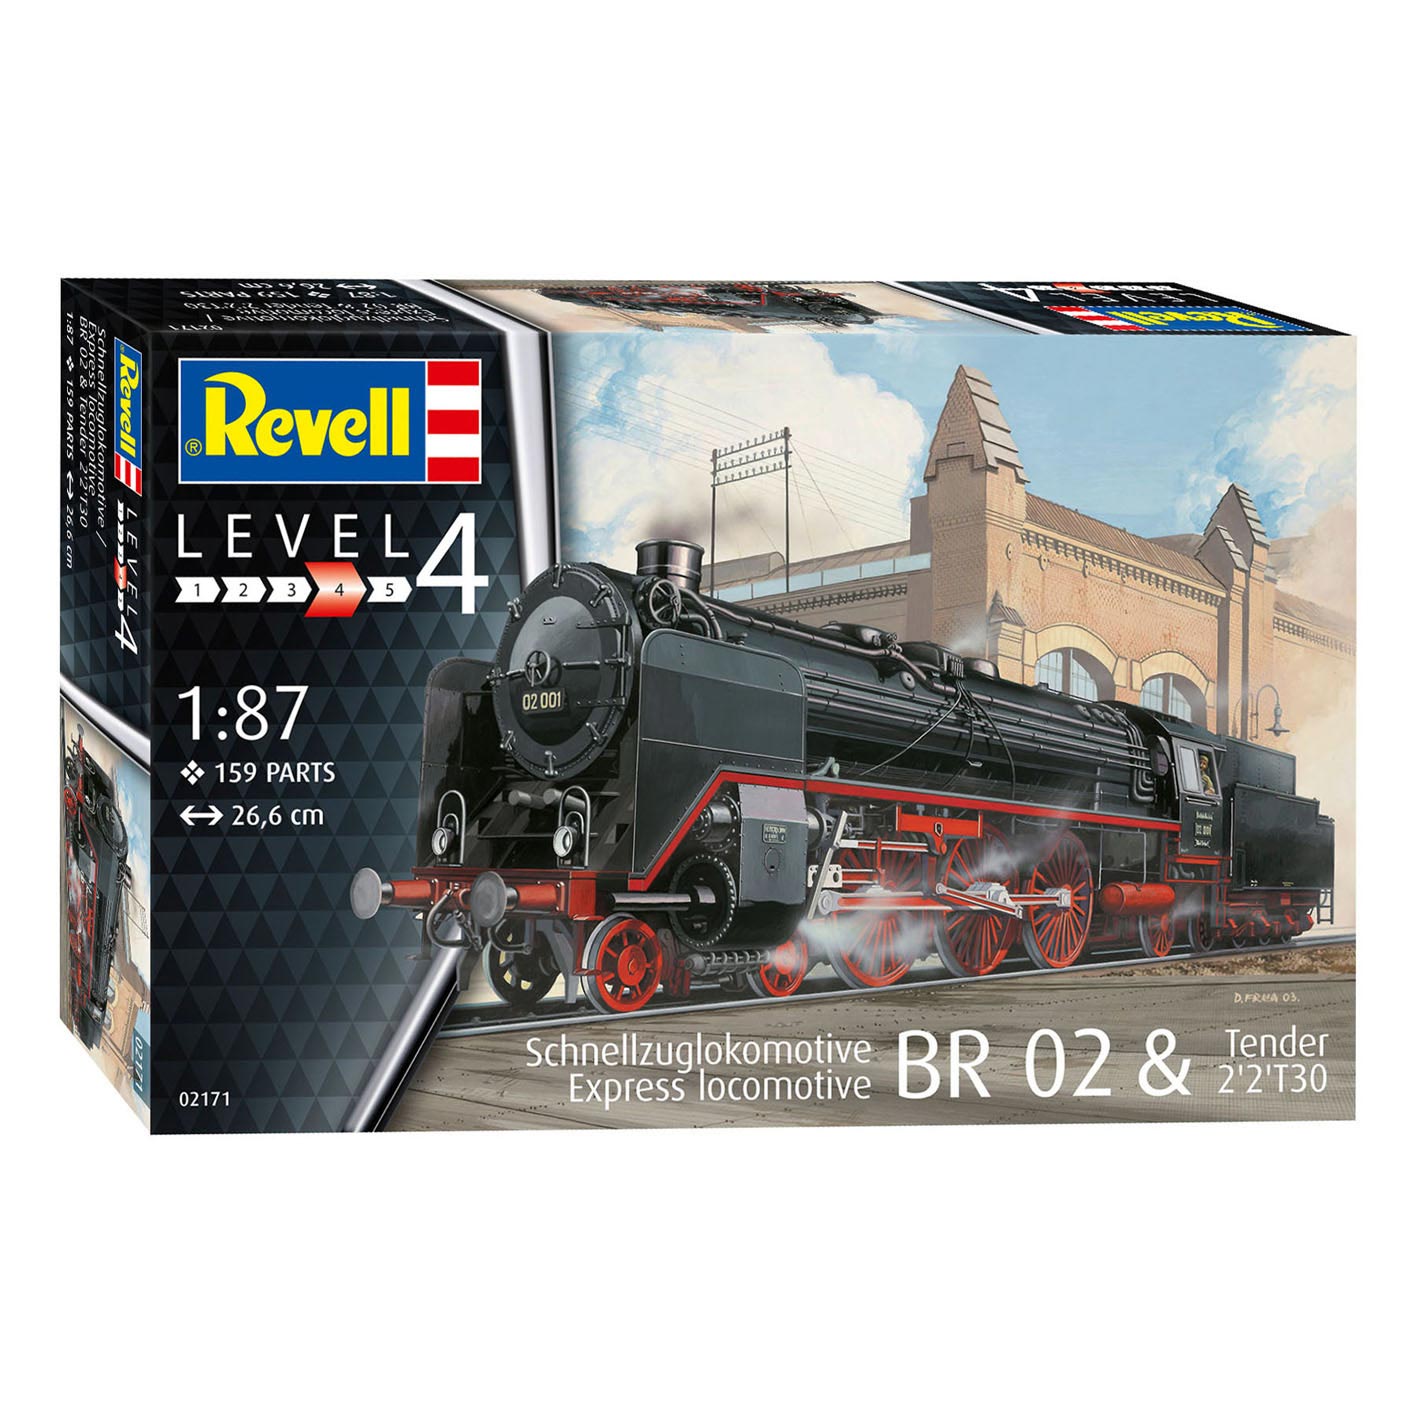 Revell Express Locomotief BR 02 & Tender 2'2'T30 Modelbouw